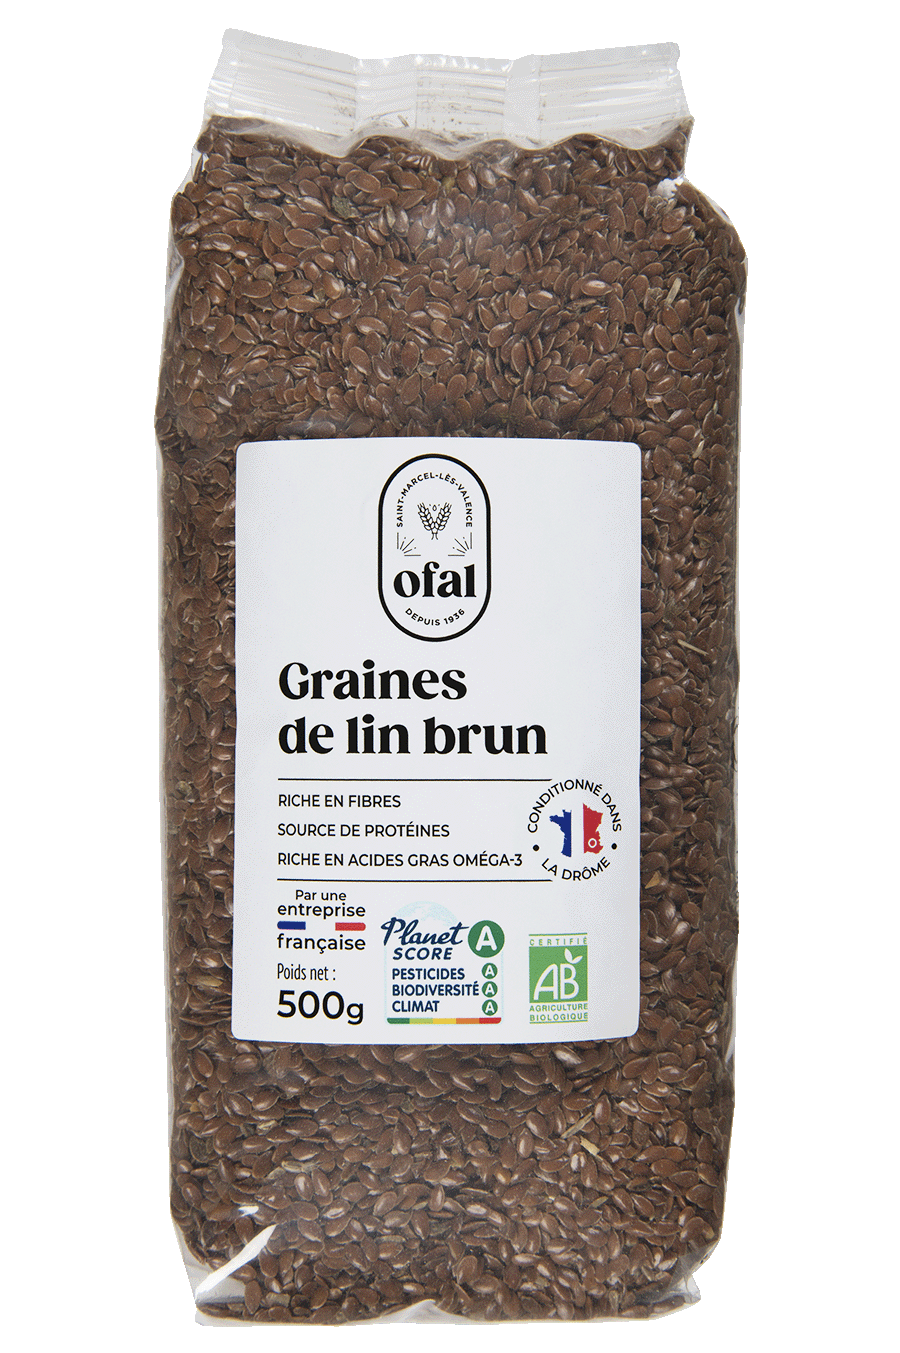 ABCD Nutrition -- Graines de lin brun bio vrac (origine France